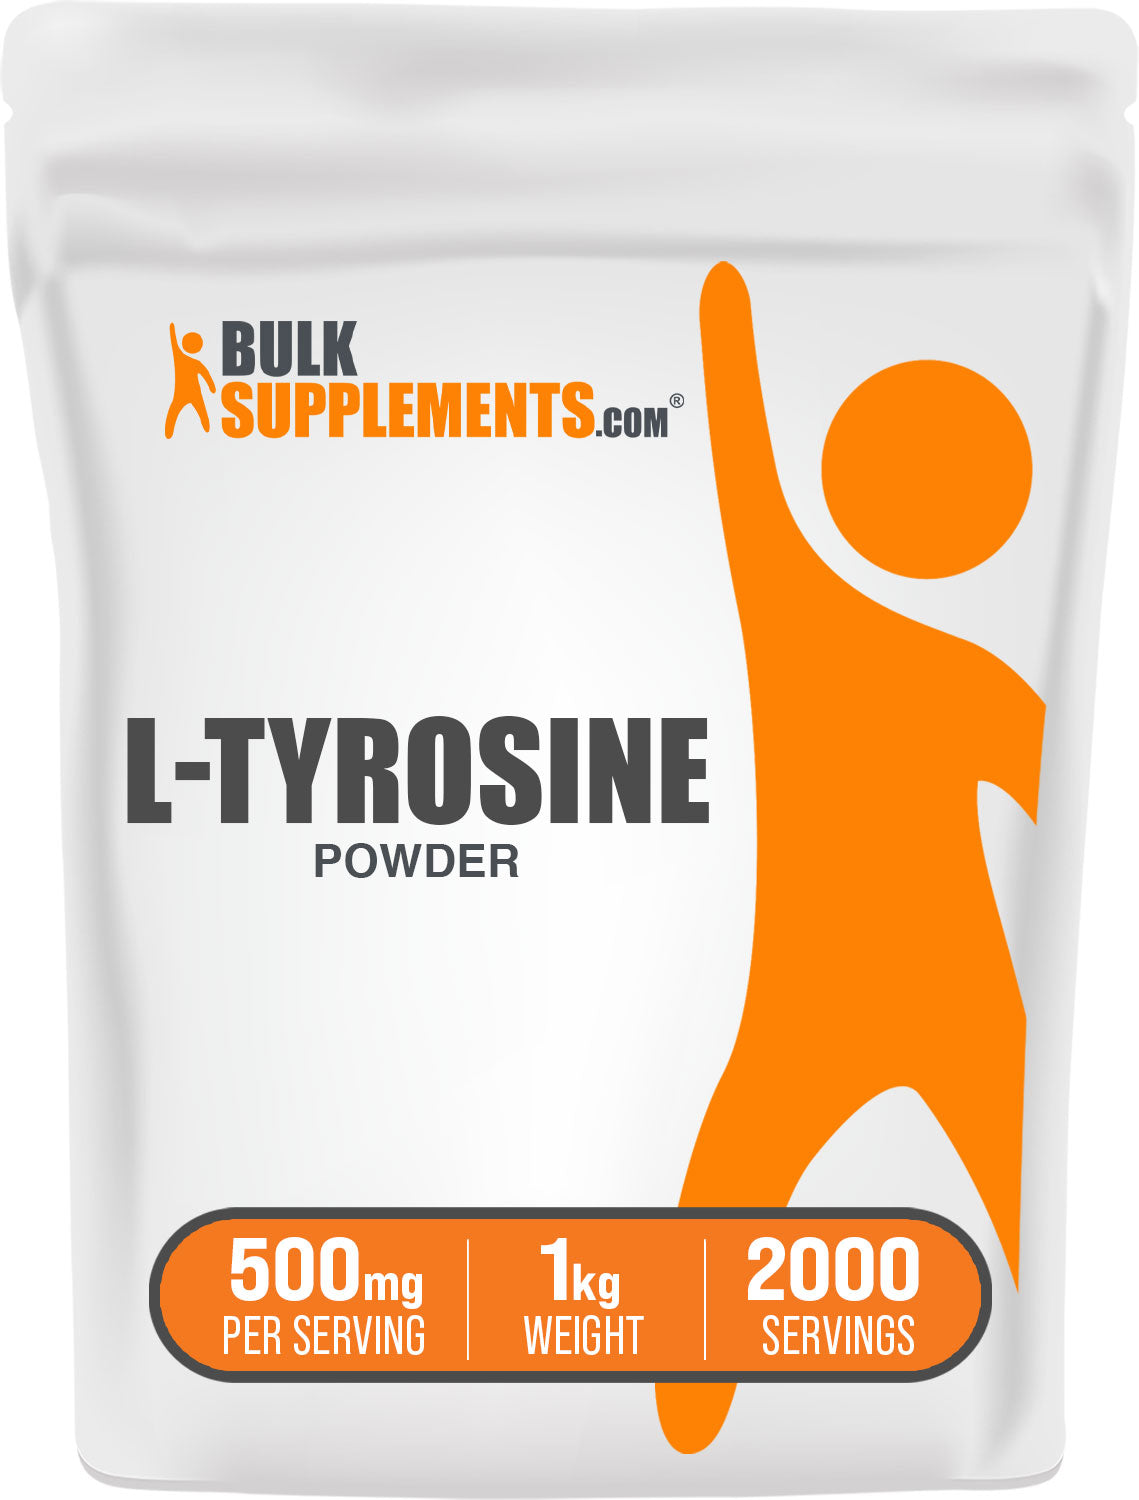 L-Tyrosine Powder 1kg bag